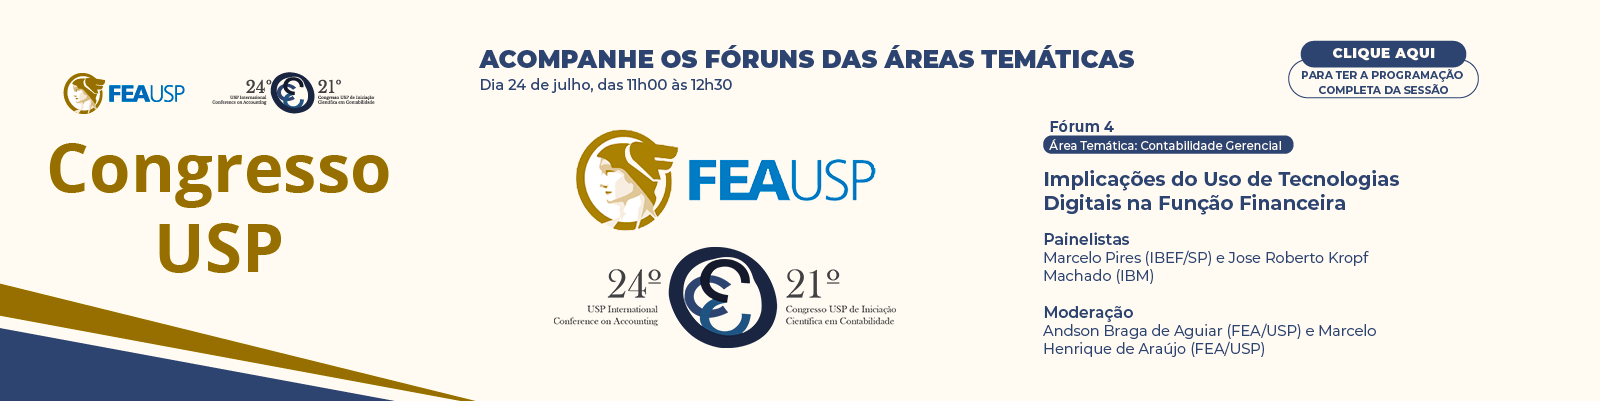 Banner_Forum-das-areas-tematicas_congresso-USP-2